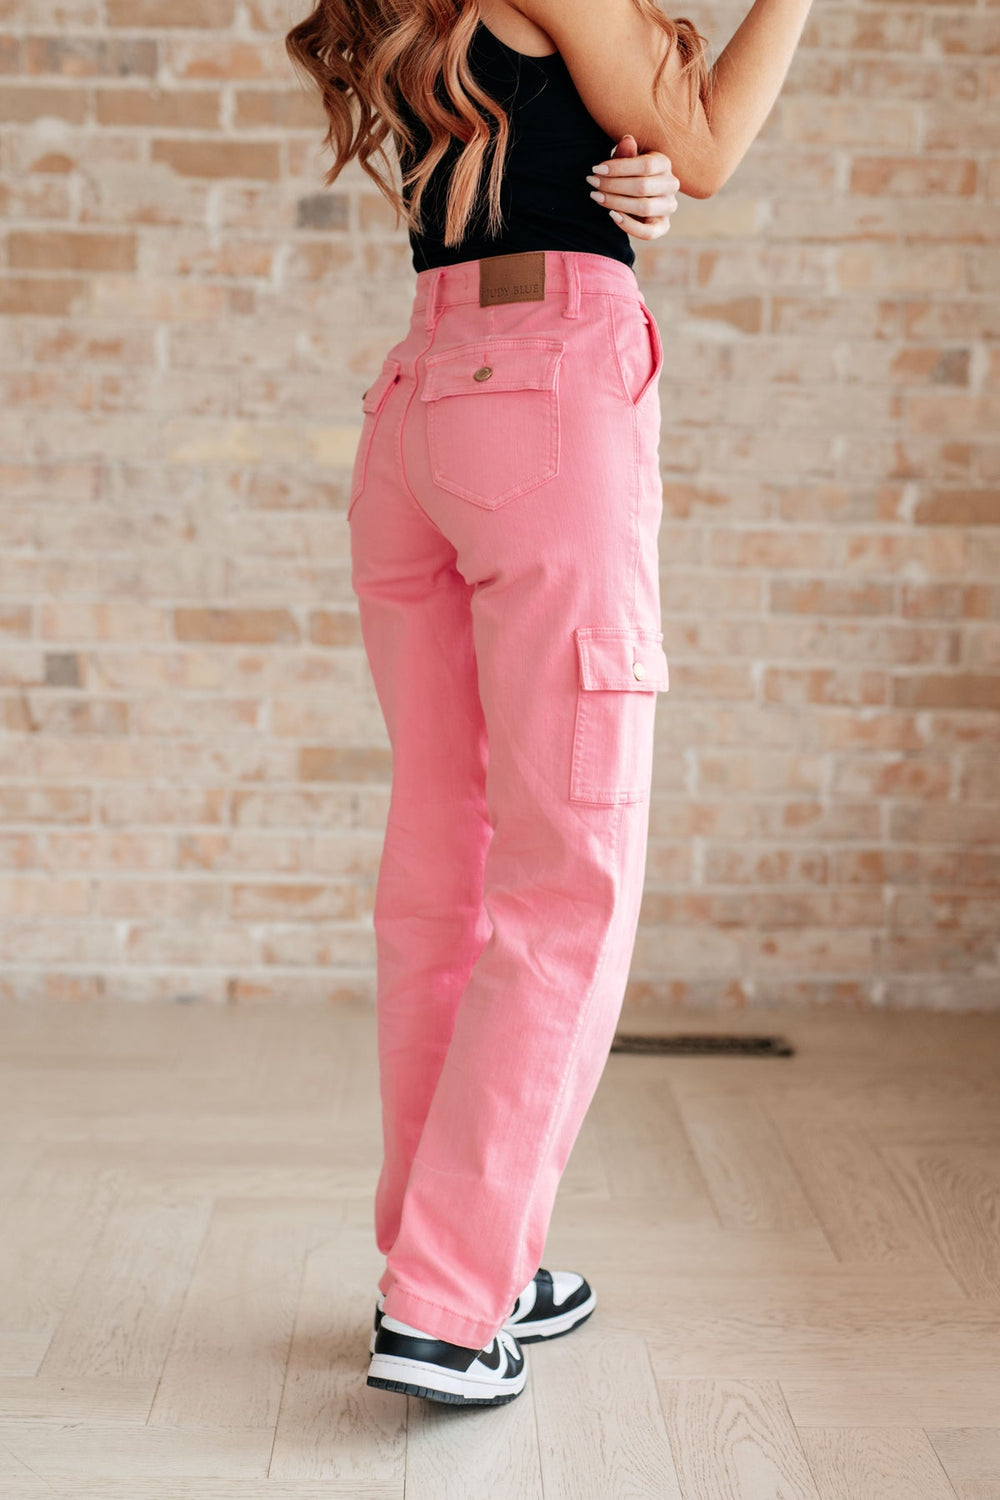 Judy Blue - Pink Jeans - Cargo Denim - Inspired Eye Boutique